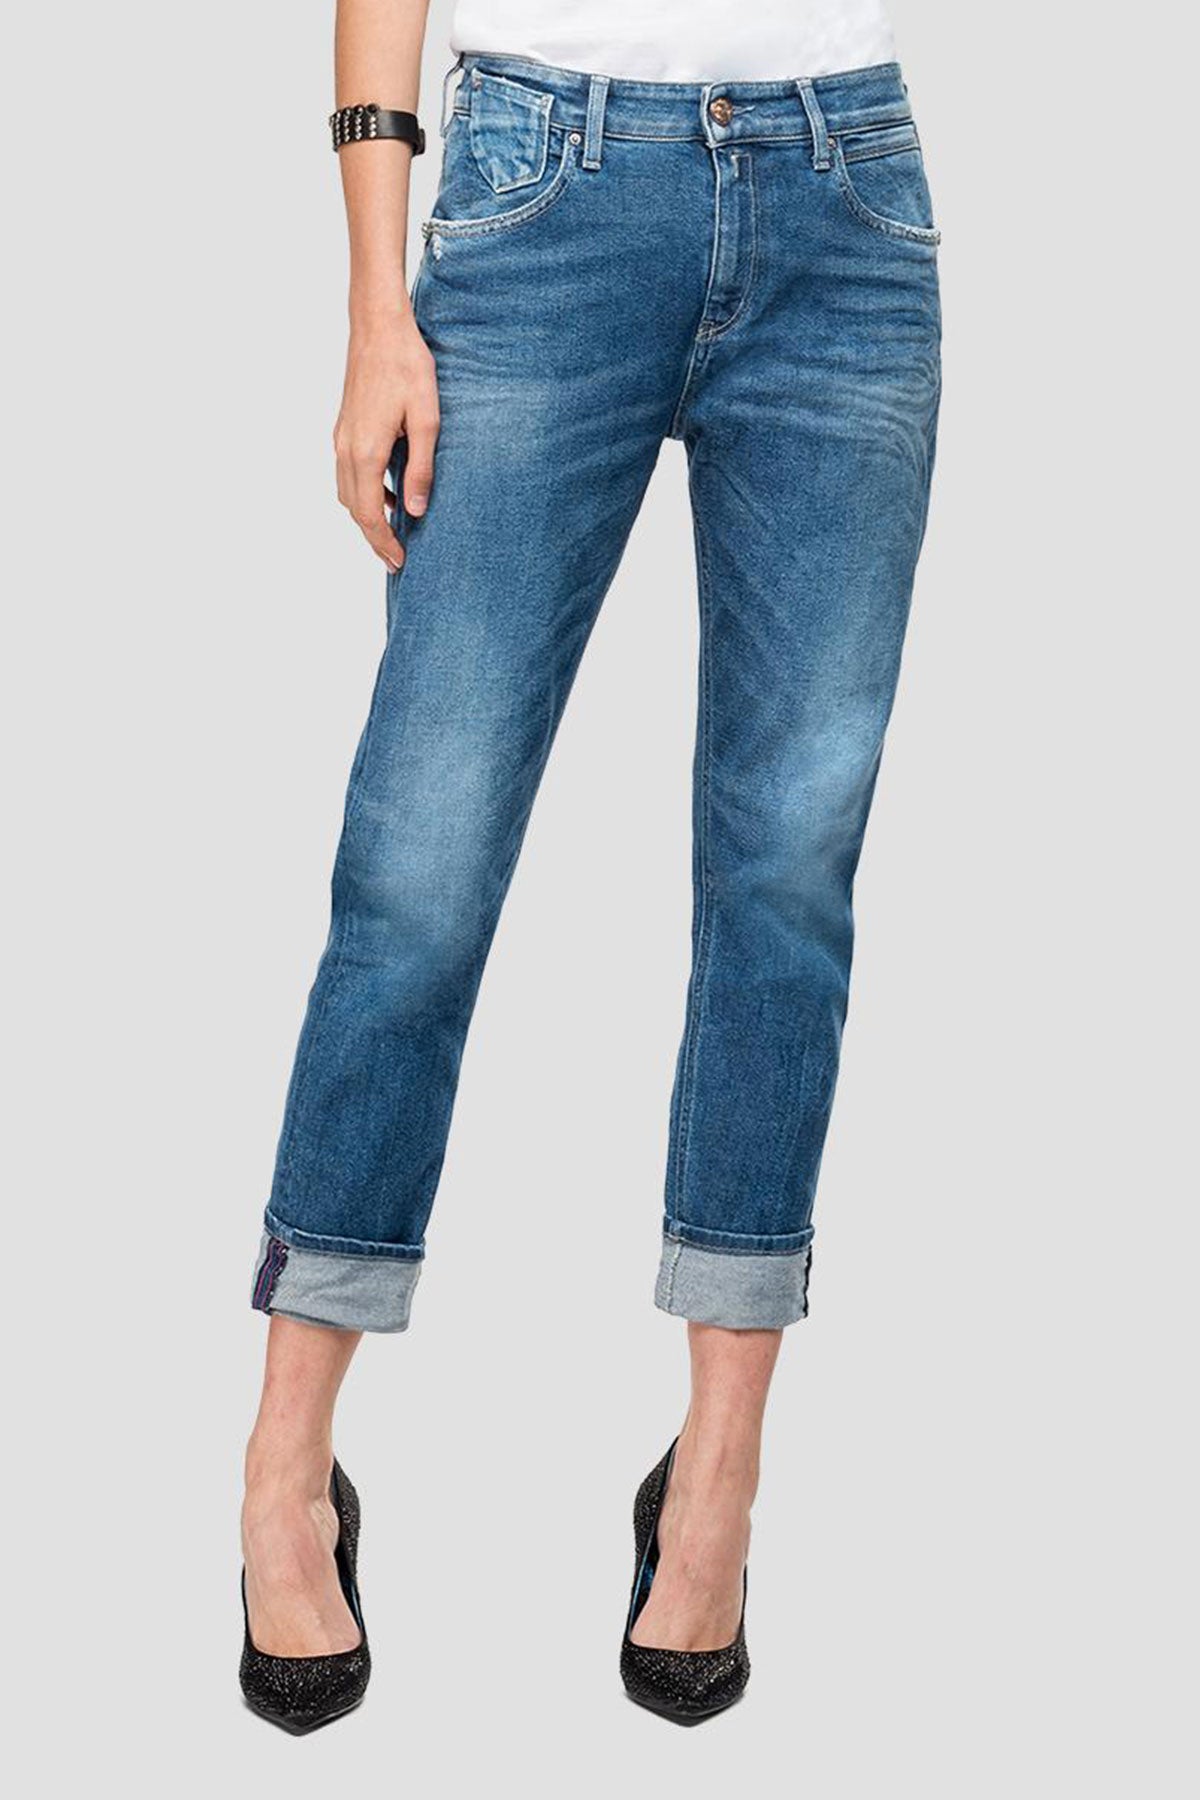 Replay Marty Boyfriend Fit Jeans-Libas Trendy Fashion Store